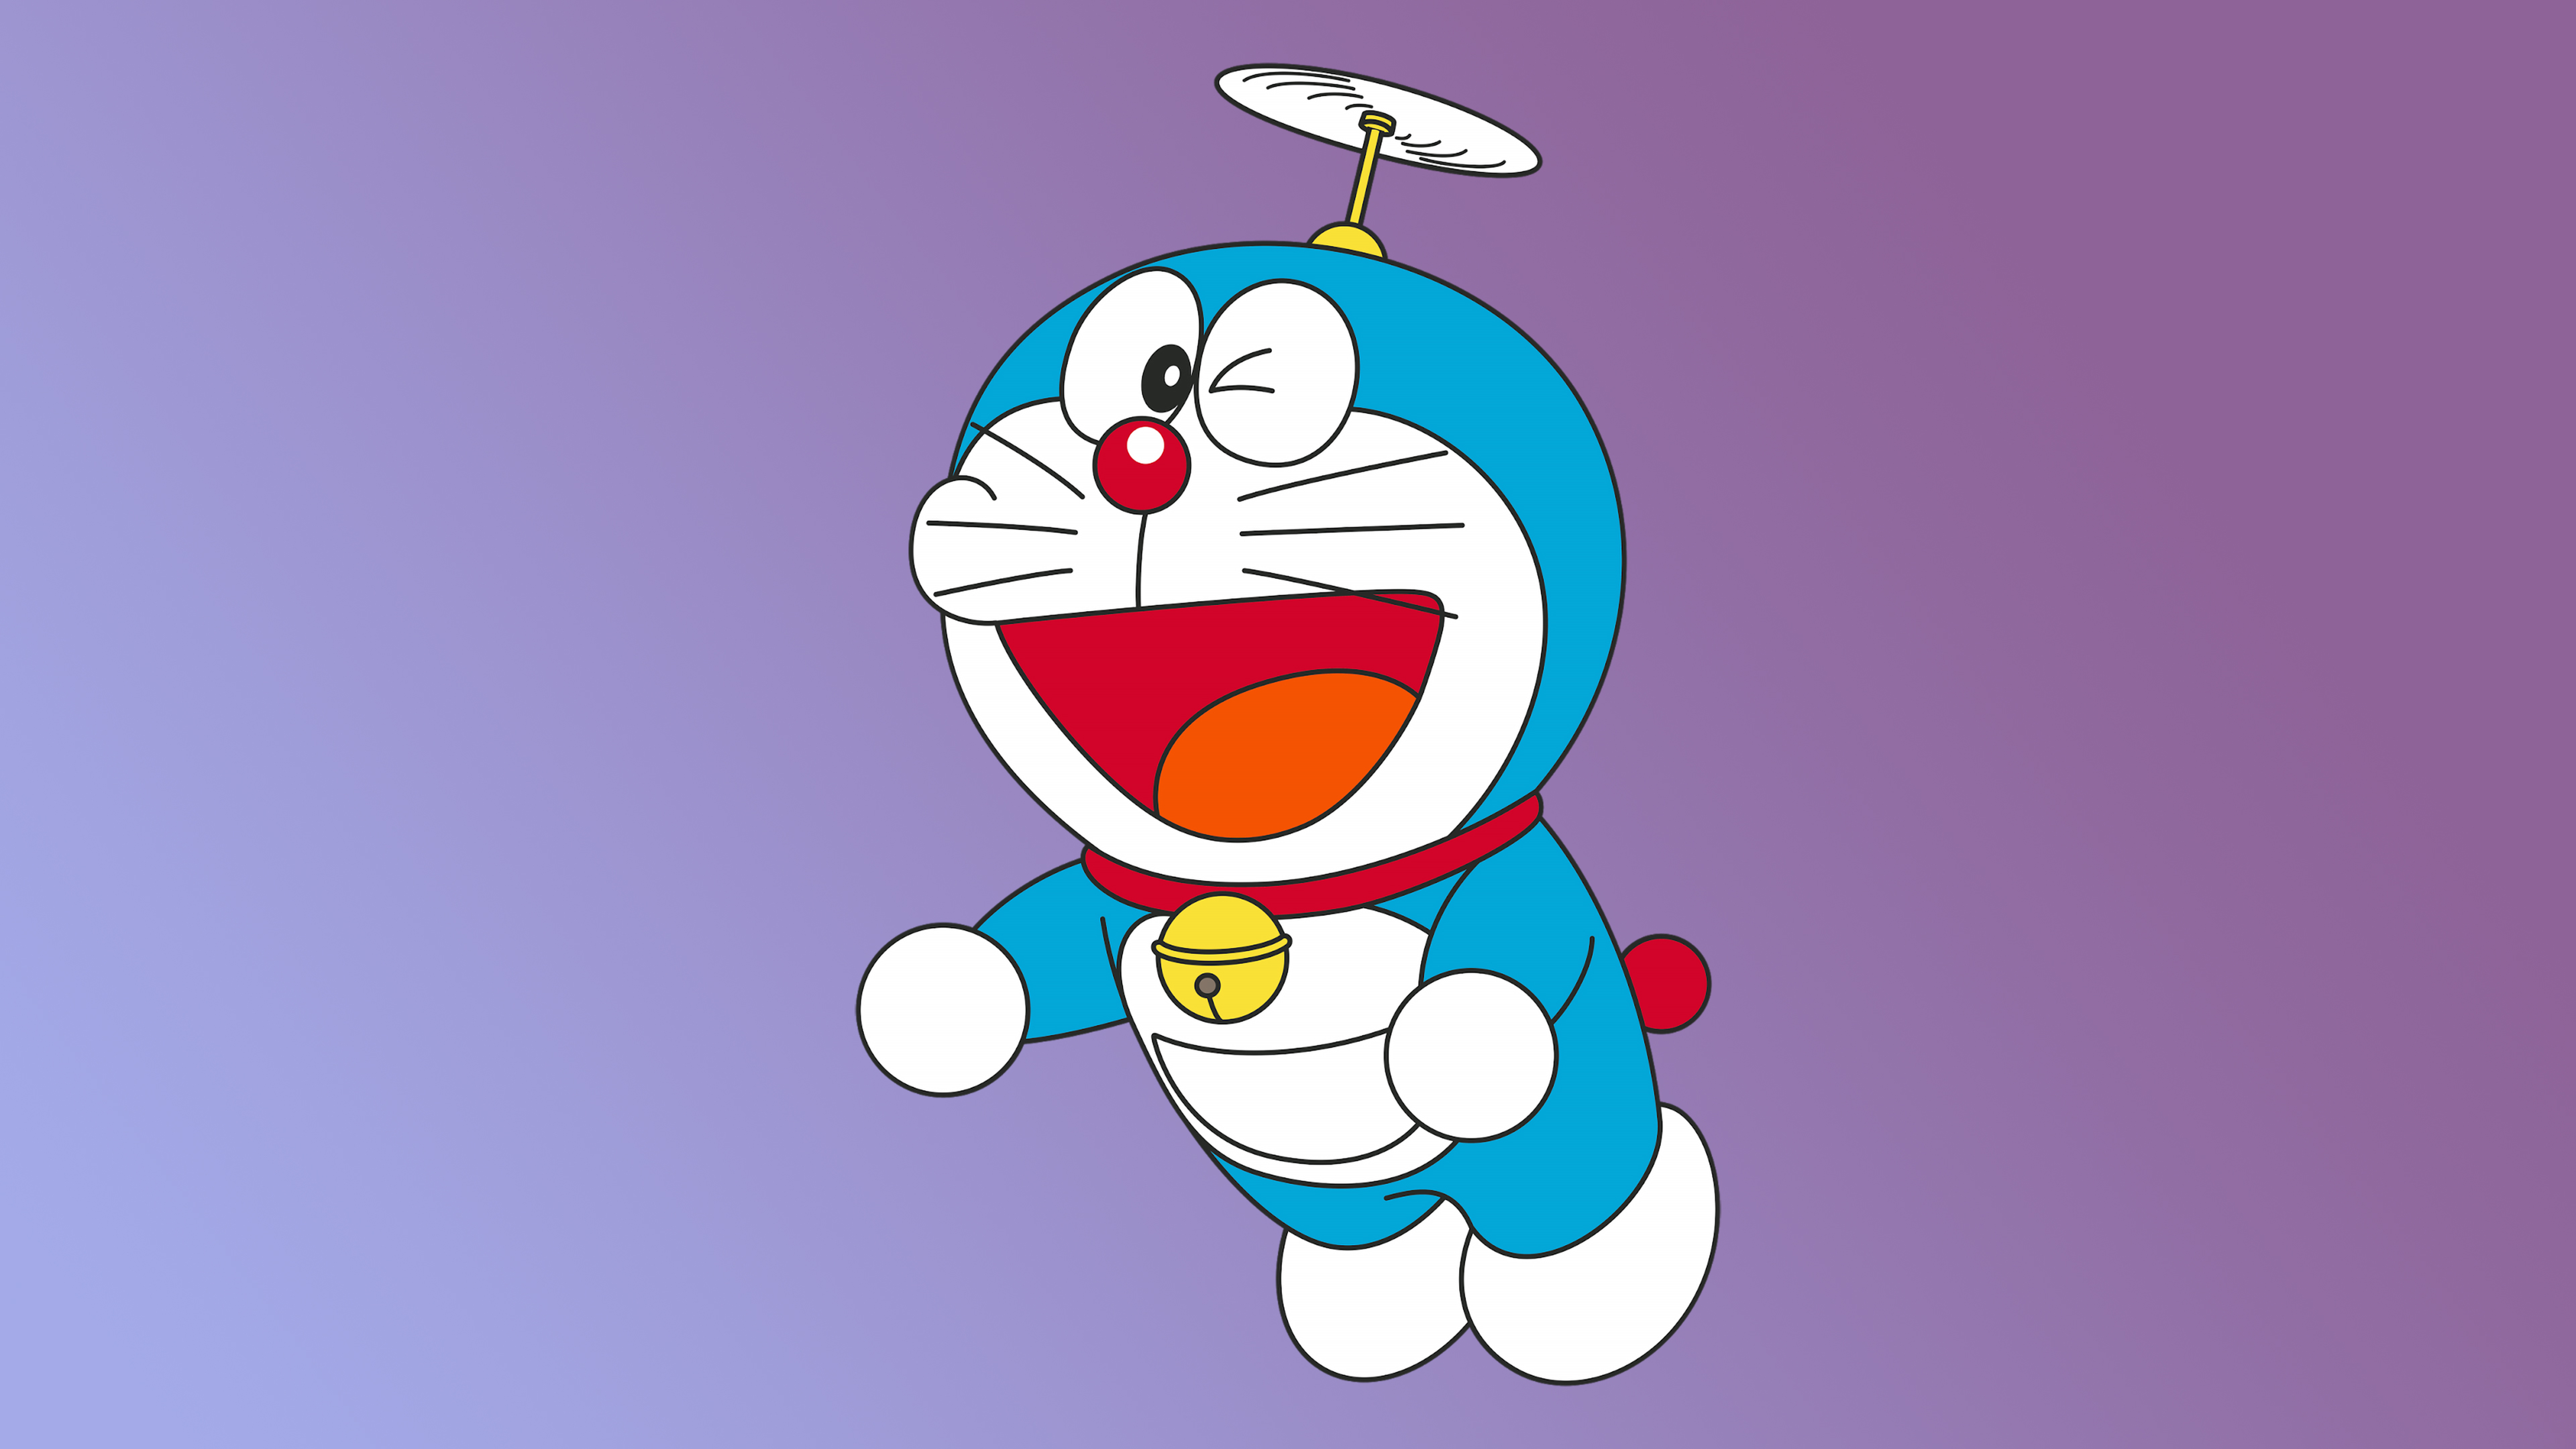 7680x4320 Doraemon Minimal 4K 8K Wallpaper, HD Cartoon 4K Wallpapers,  Images, Photos and Background - Wallpapers Den